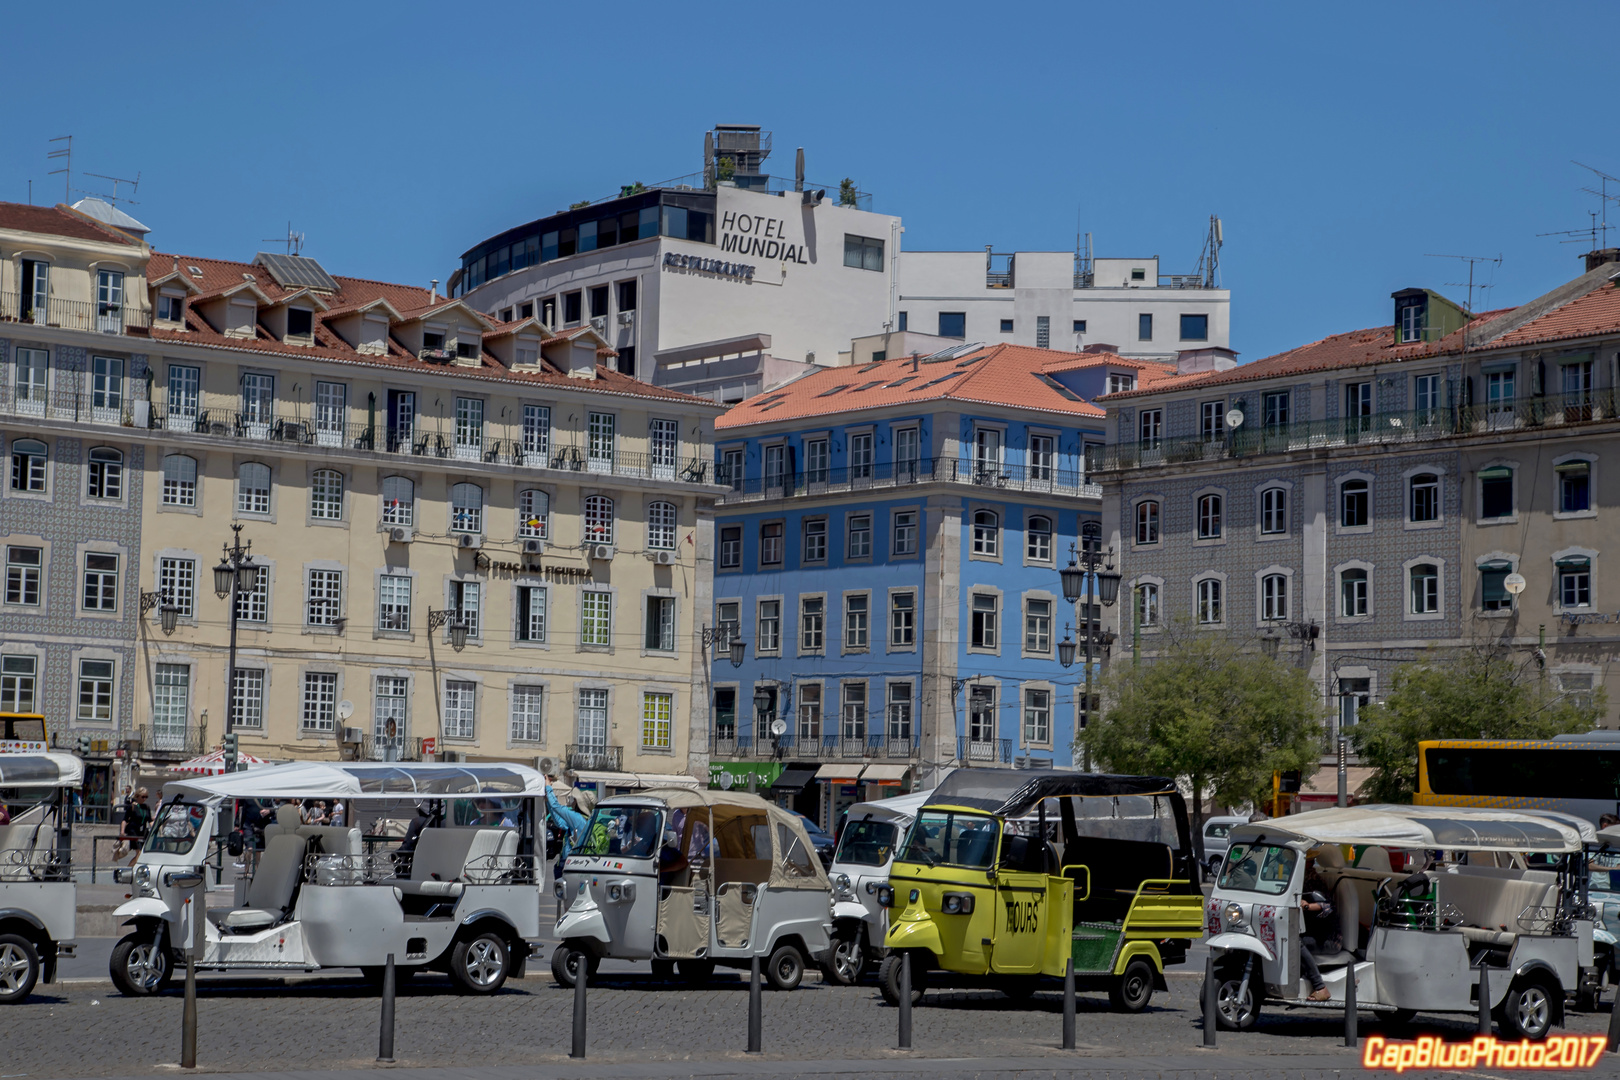 Praça da Figueira mit Tuk Tuks in allen Varianten